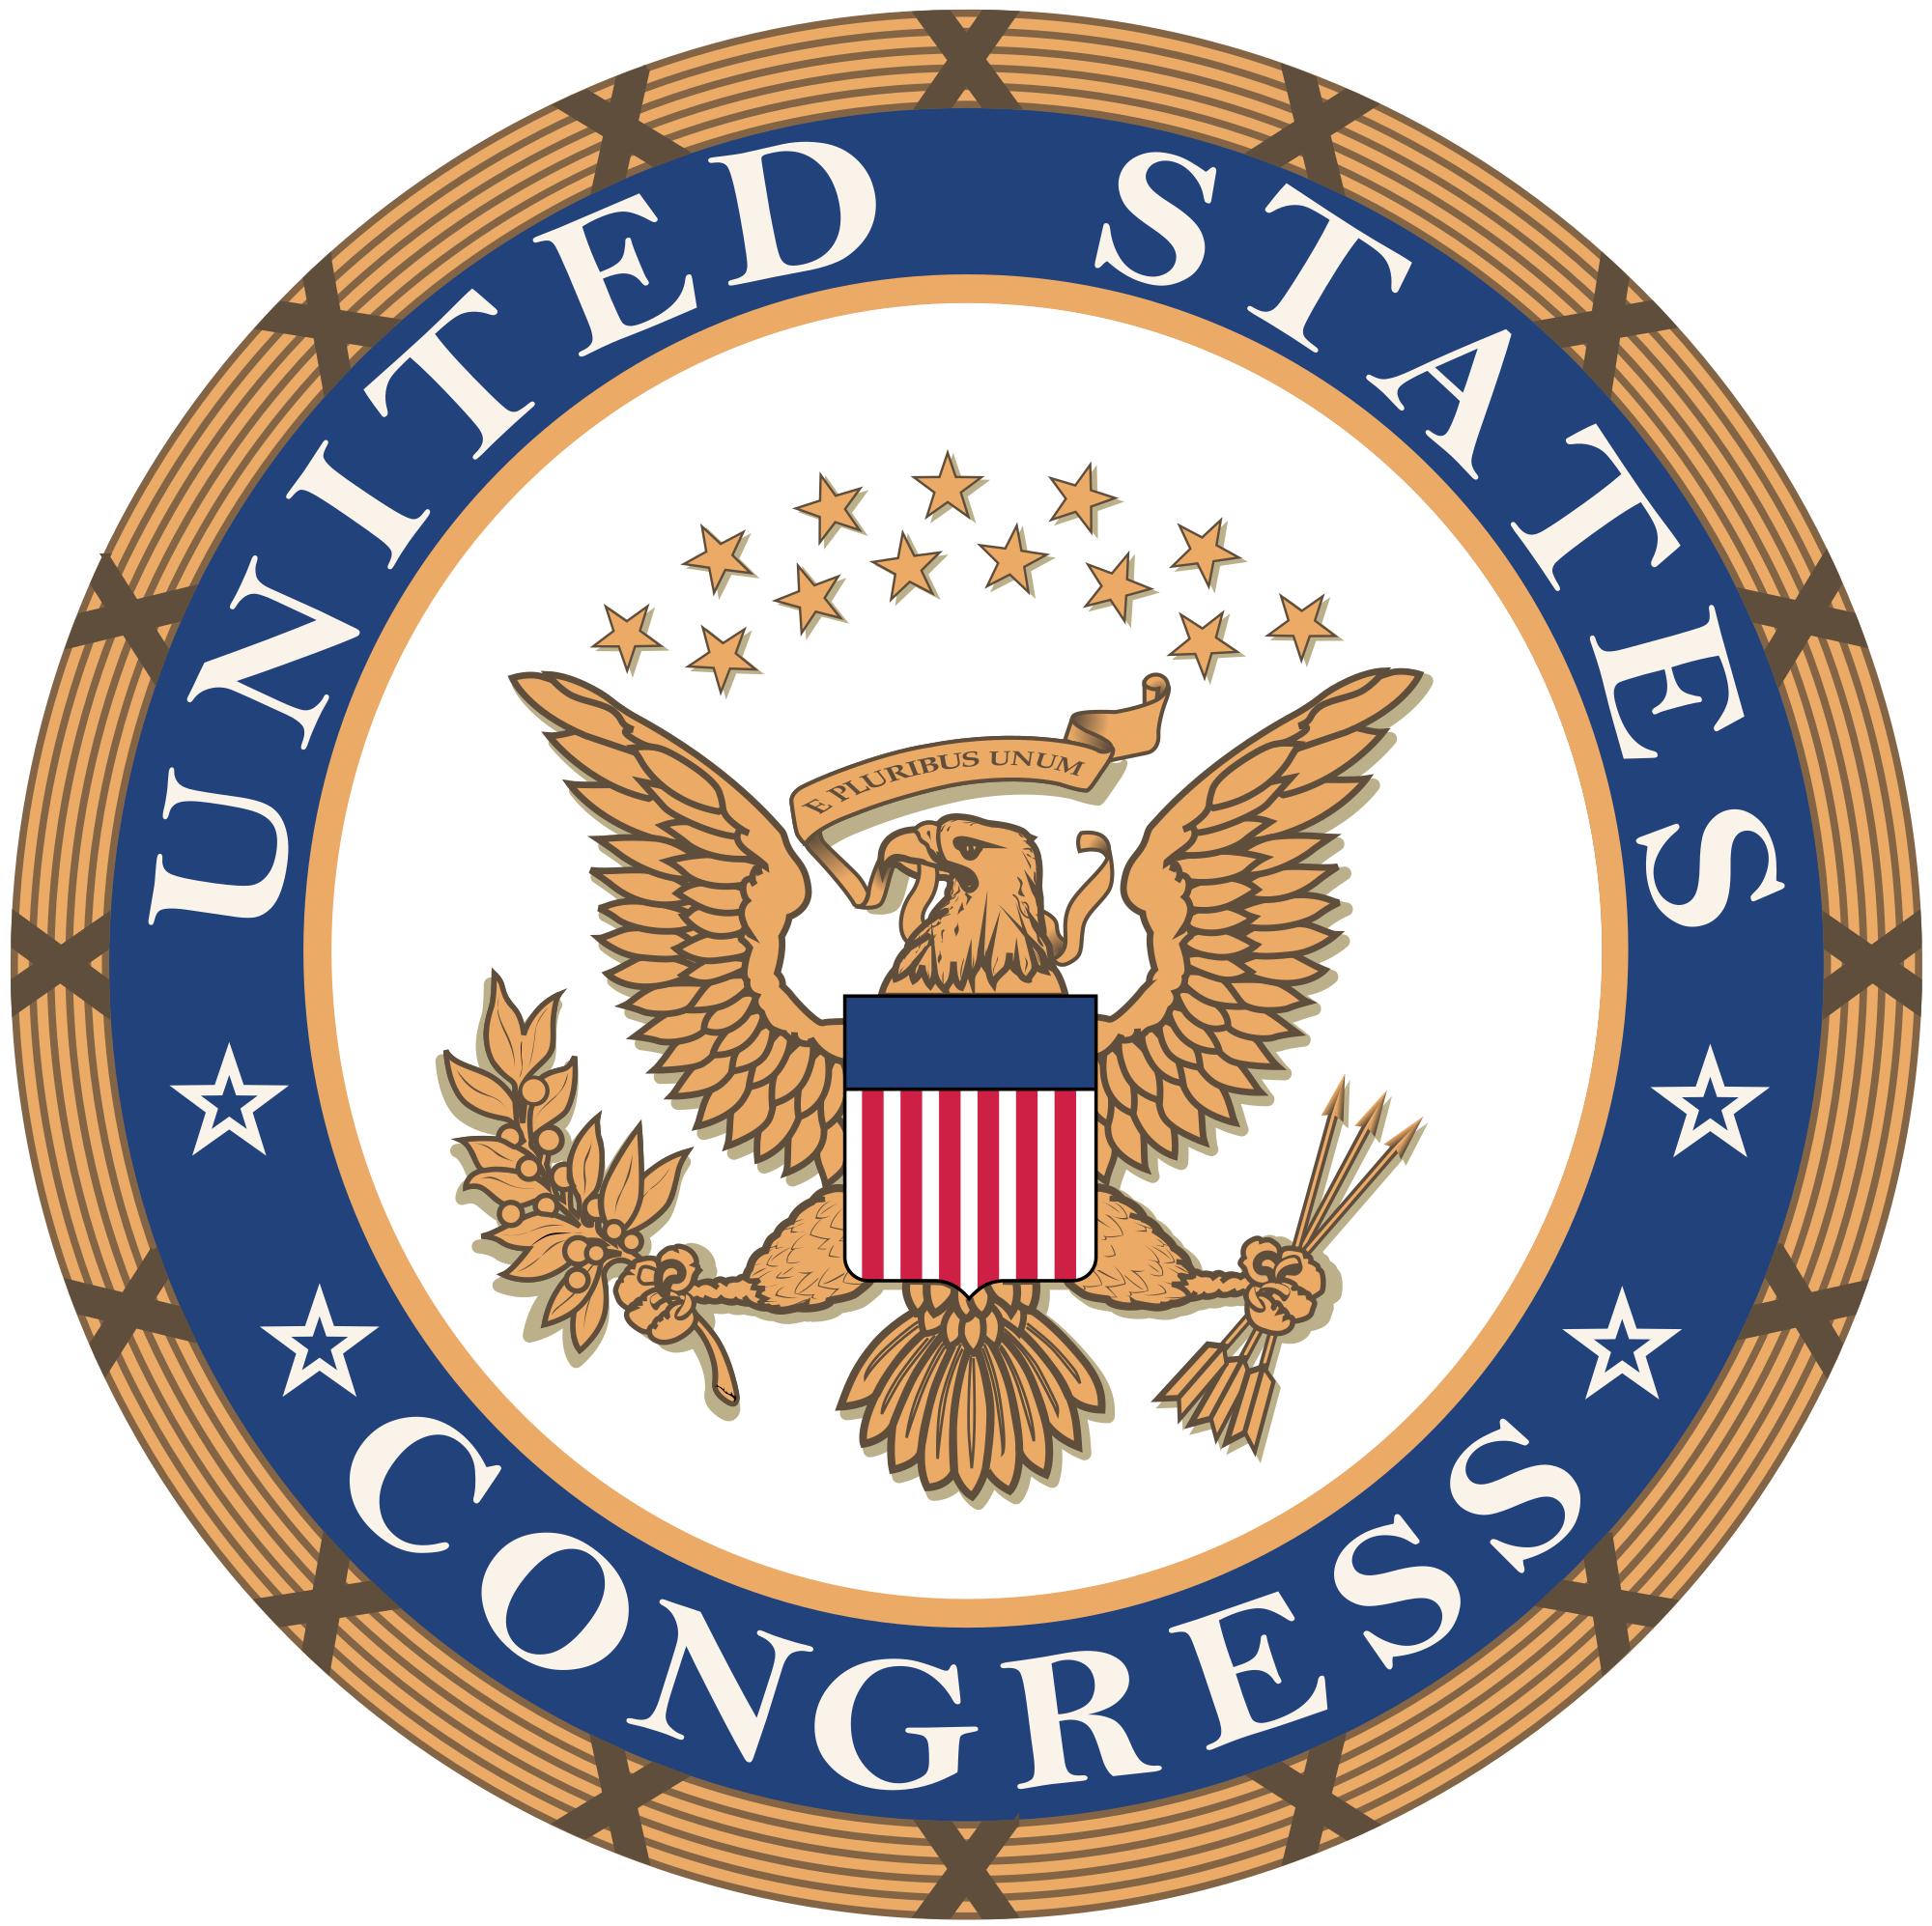 Congressional Gaming Caucus - Wikipedia